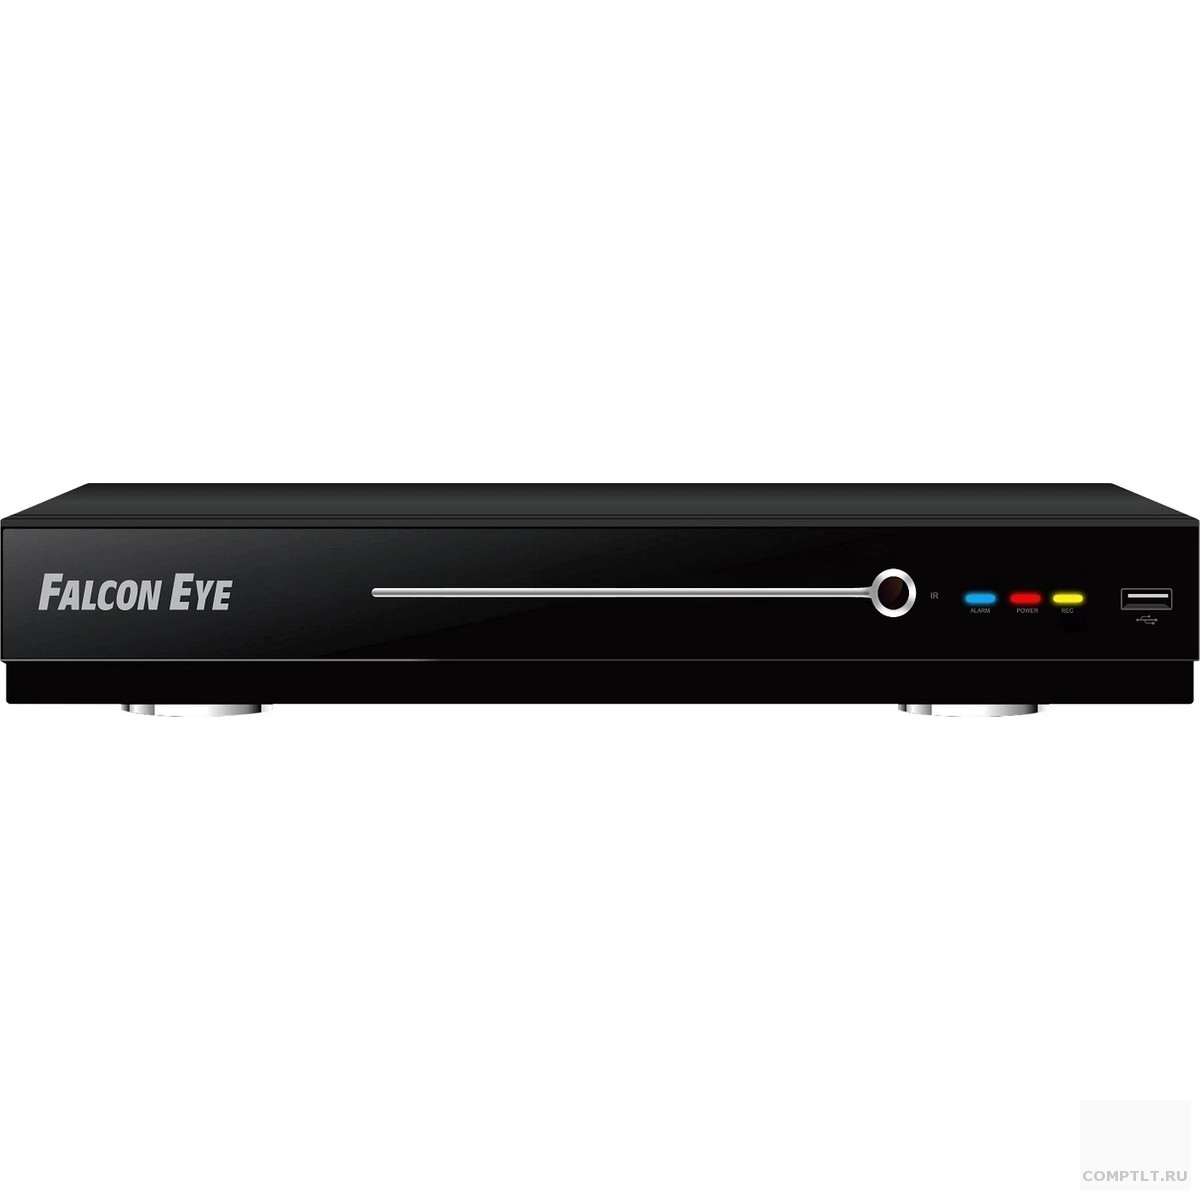 Falcon Eye FE-NVR8216 16 канальный 4K IP регистратор Запись 16 кан 8Мп 30к/с Поток вх/вых 160/80 Mbps Н.264/H.265/H265 Протокол ONVIF, RTSP, P2P HDMI, VGA, 2 USB, 1 LAN, SATA2до 12TB HDD